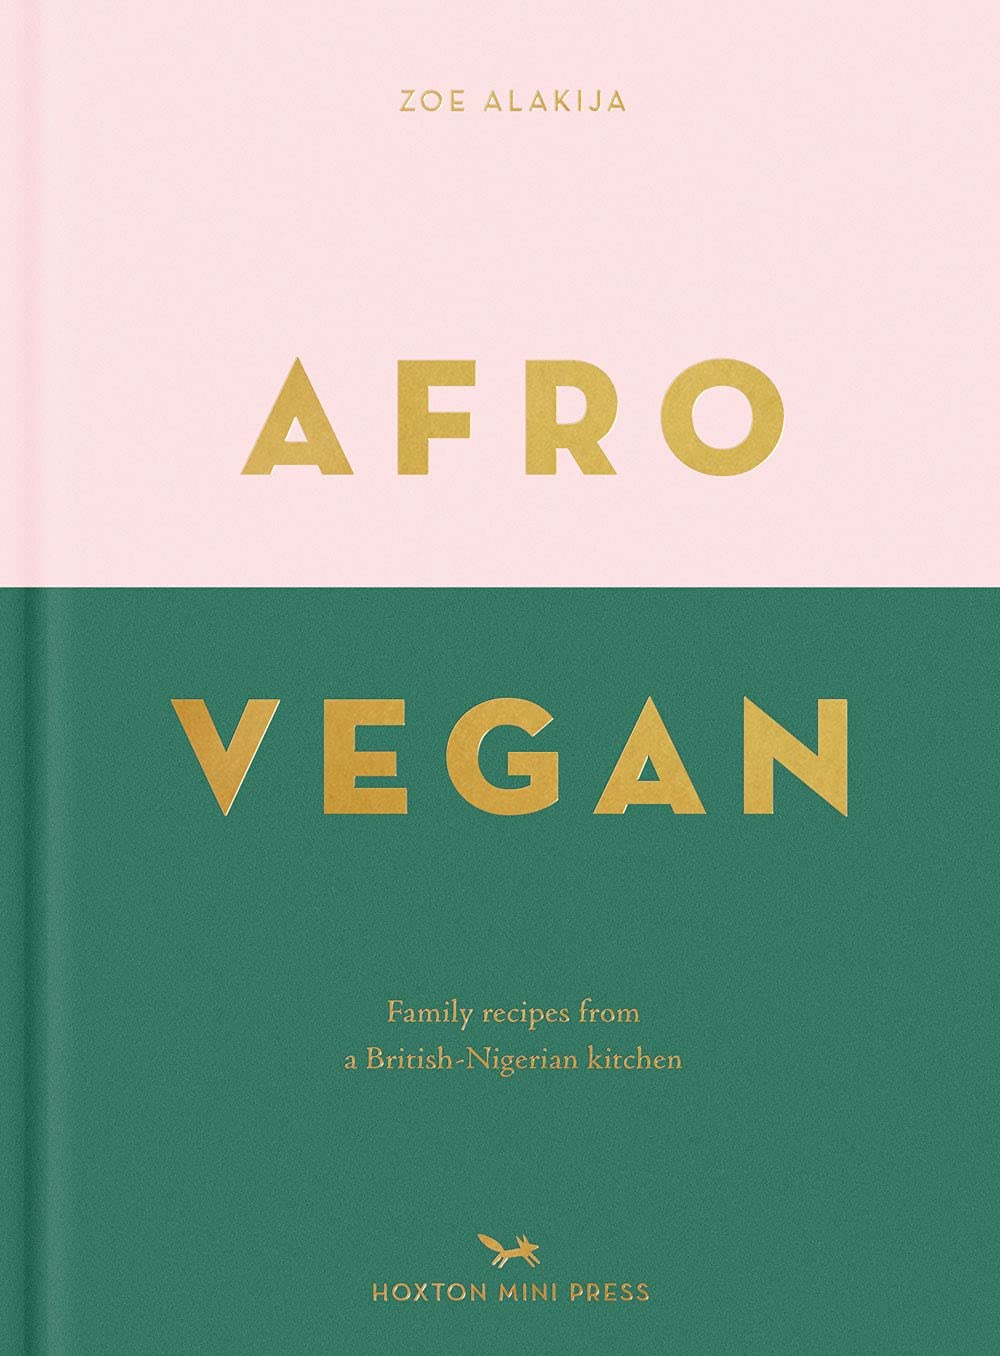 Afro Vegan: Family Recipes from a British-Nigerian Kitchen (Zoe Alakija)